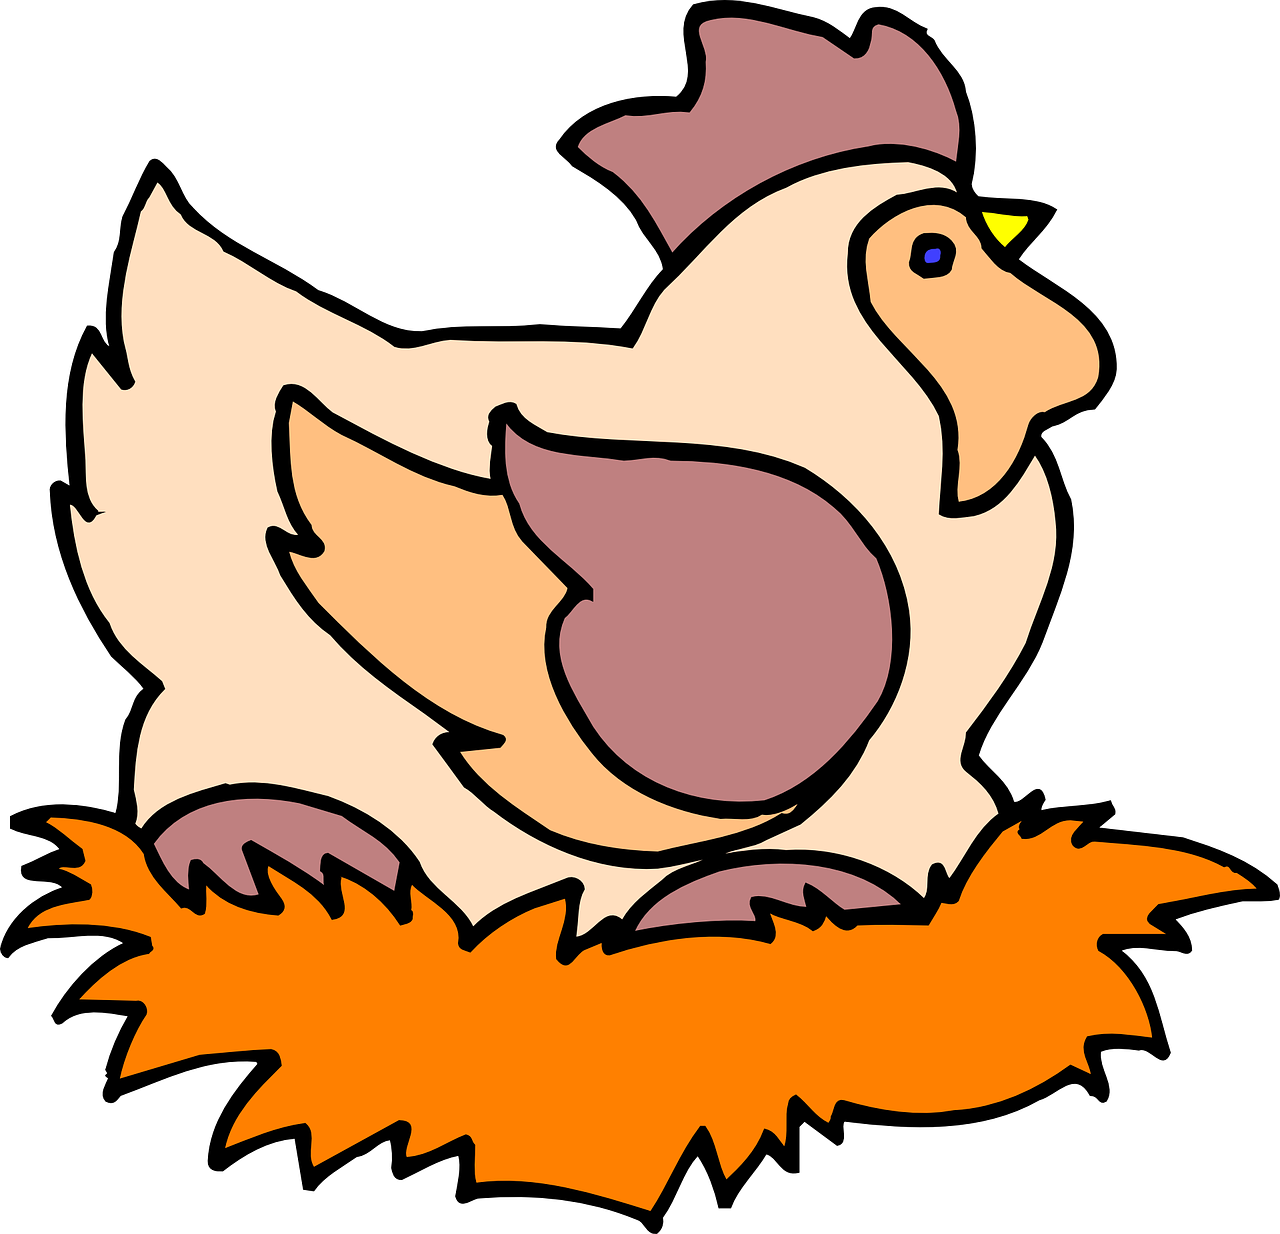 a bird sitting on top of a nest, an illustration of, pixabay, chicken, “portrait of a cartoon animal, version 3, stuffed